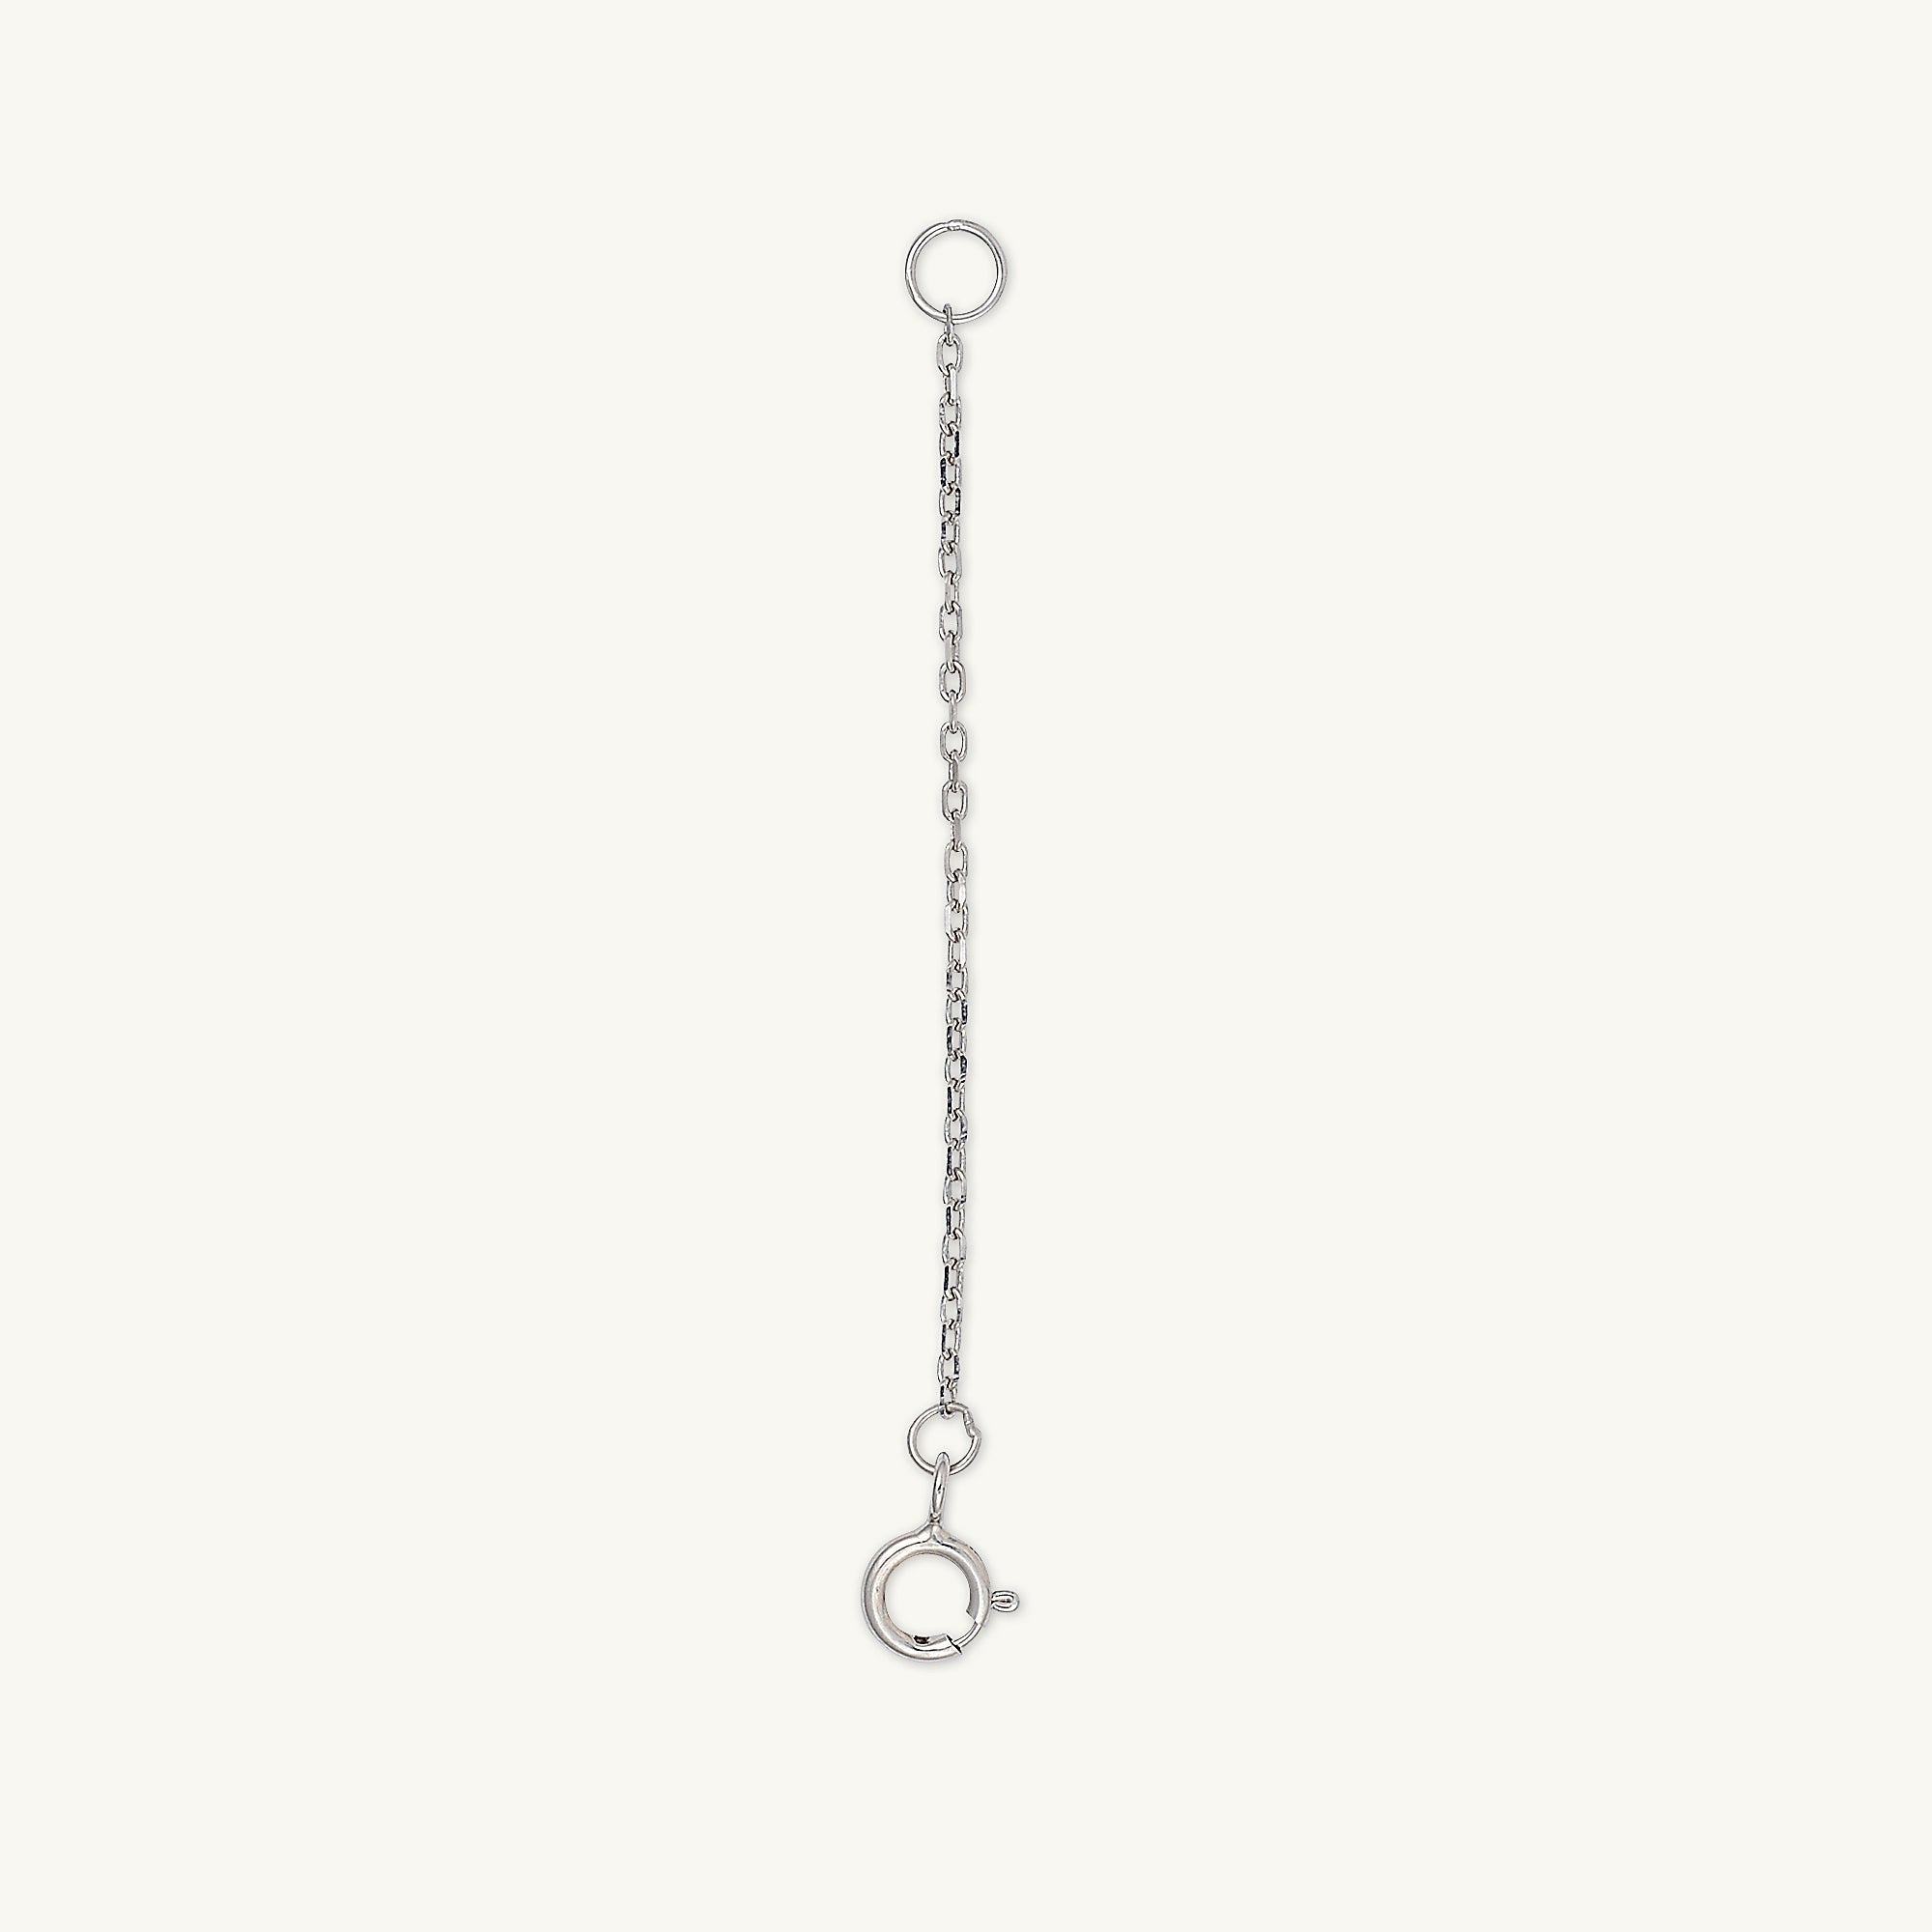 5cm Extender Necklace Chain